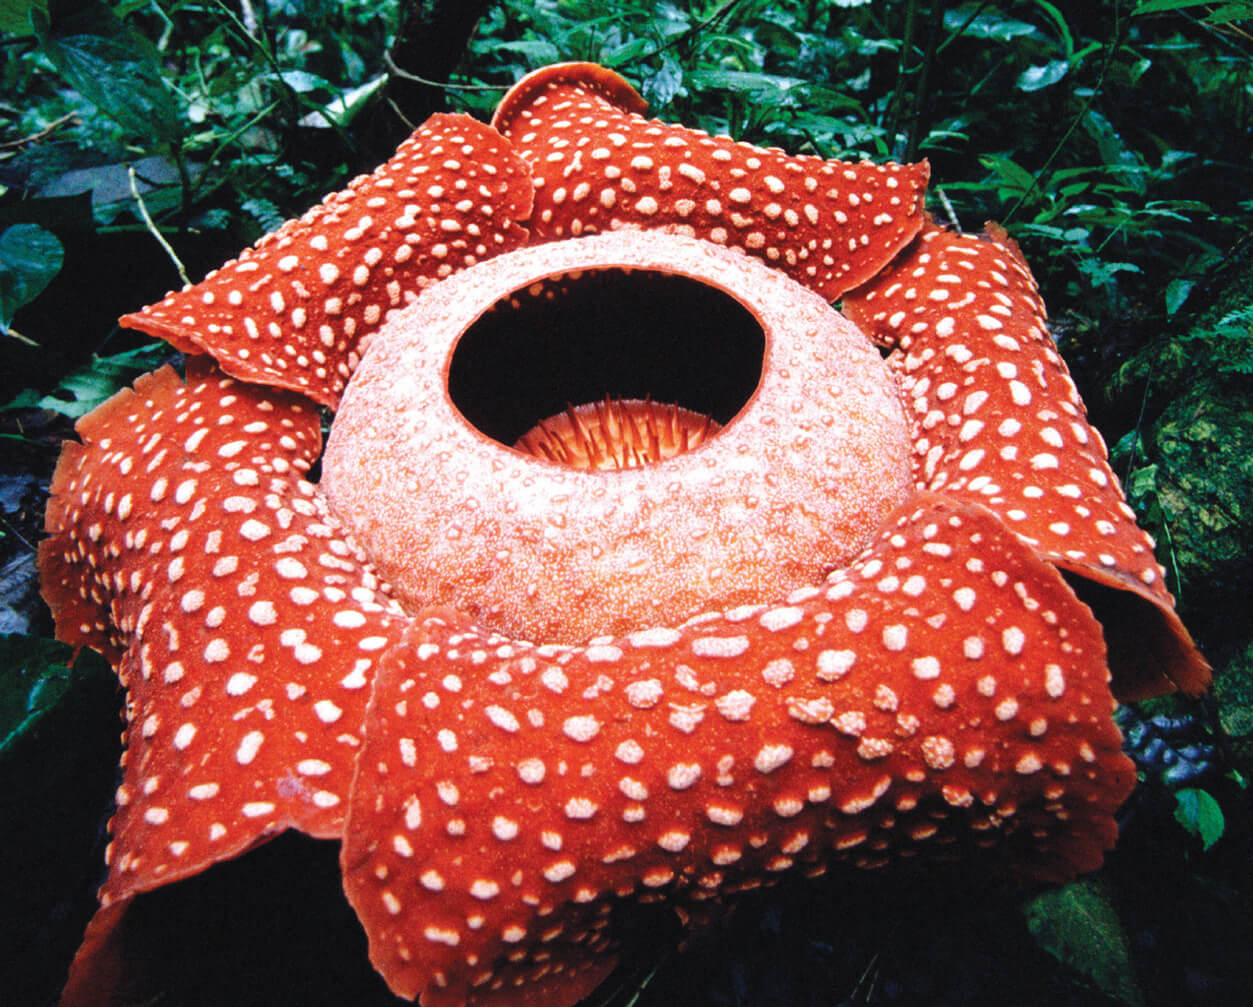 Rafflesia arnoldii, the “greatest prodigy of the vegetable world.”